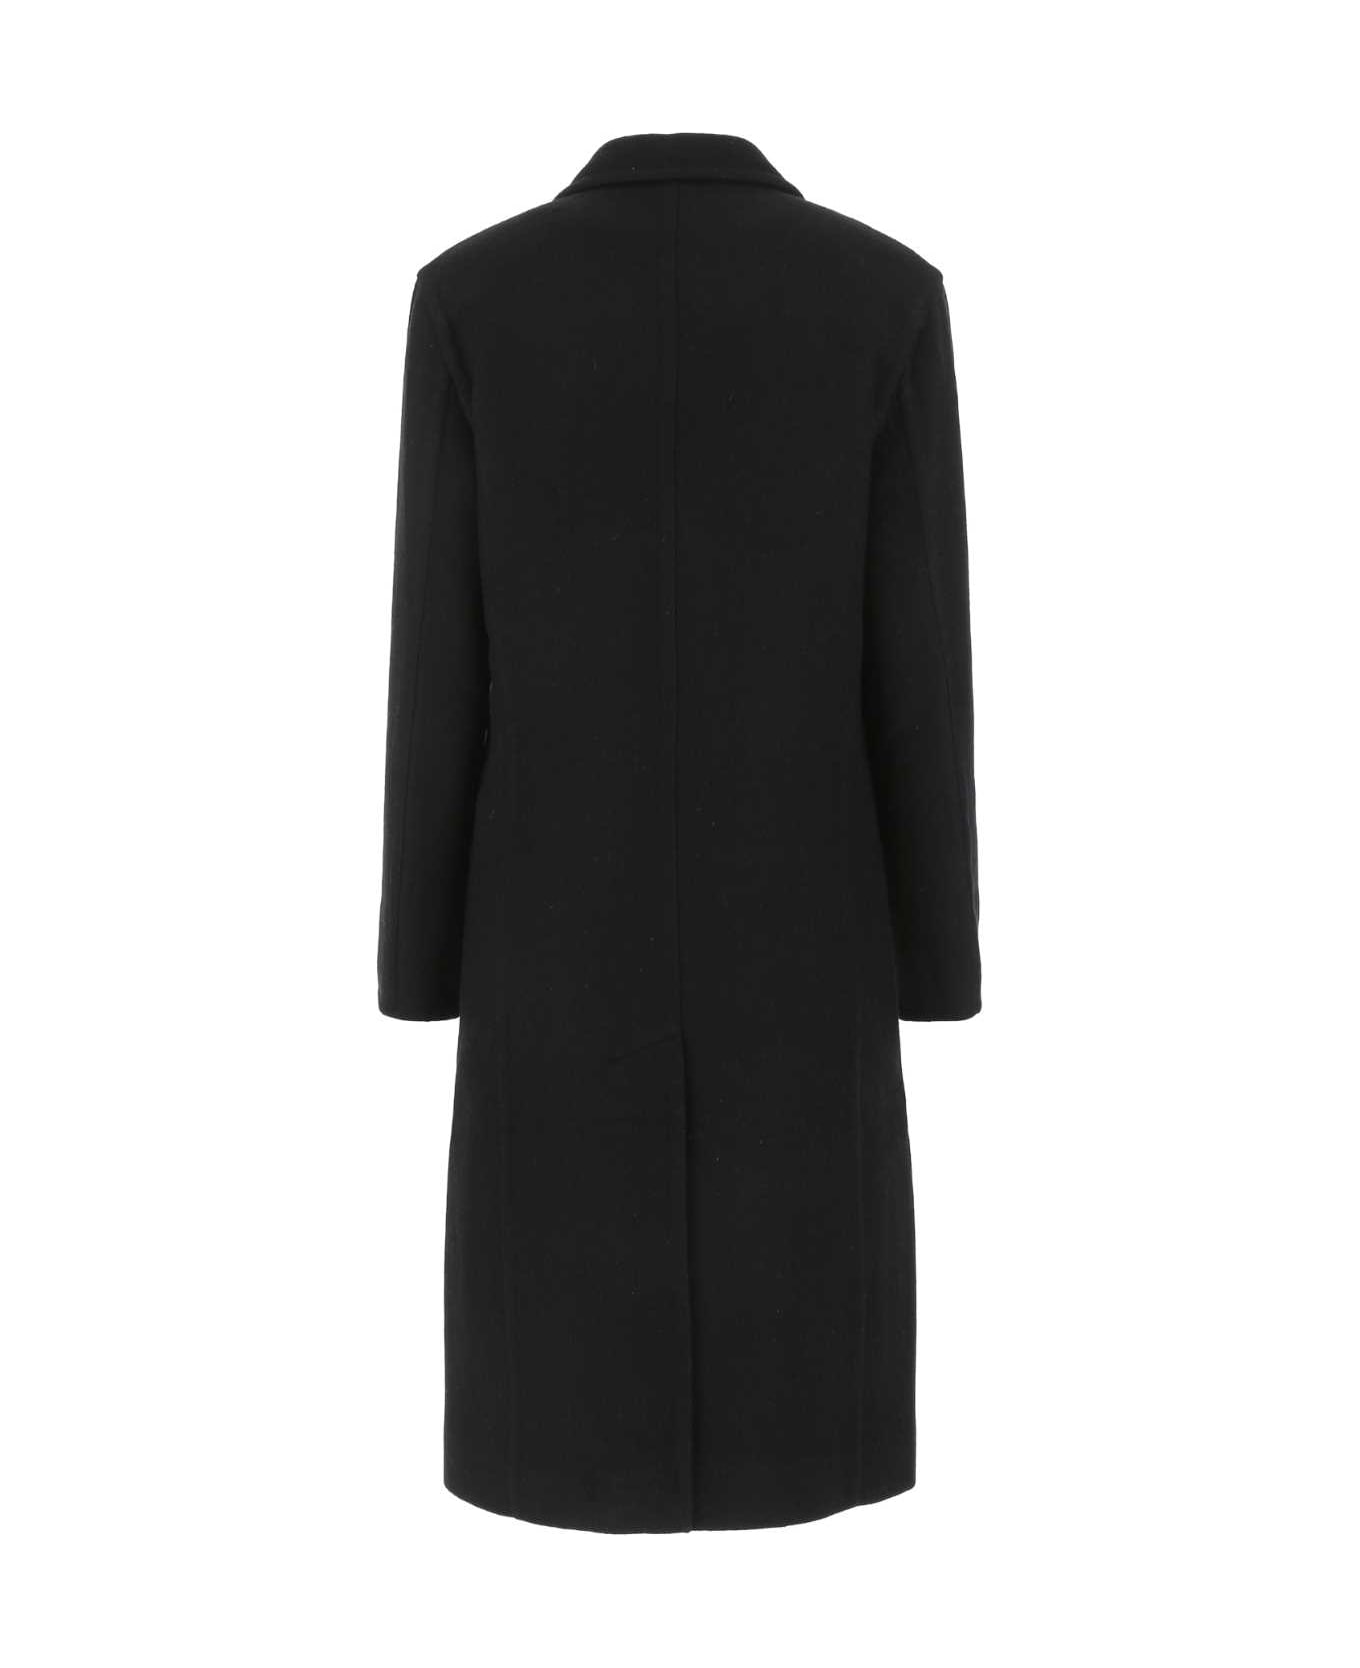 Givenchy Black Wool Blend Coat - 002